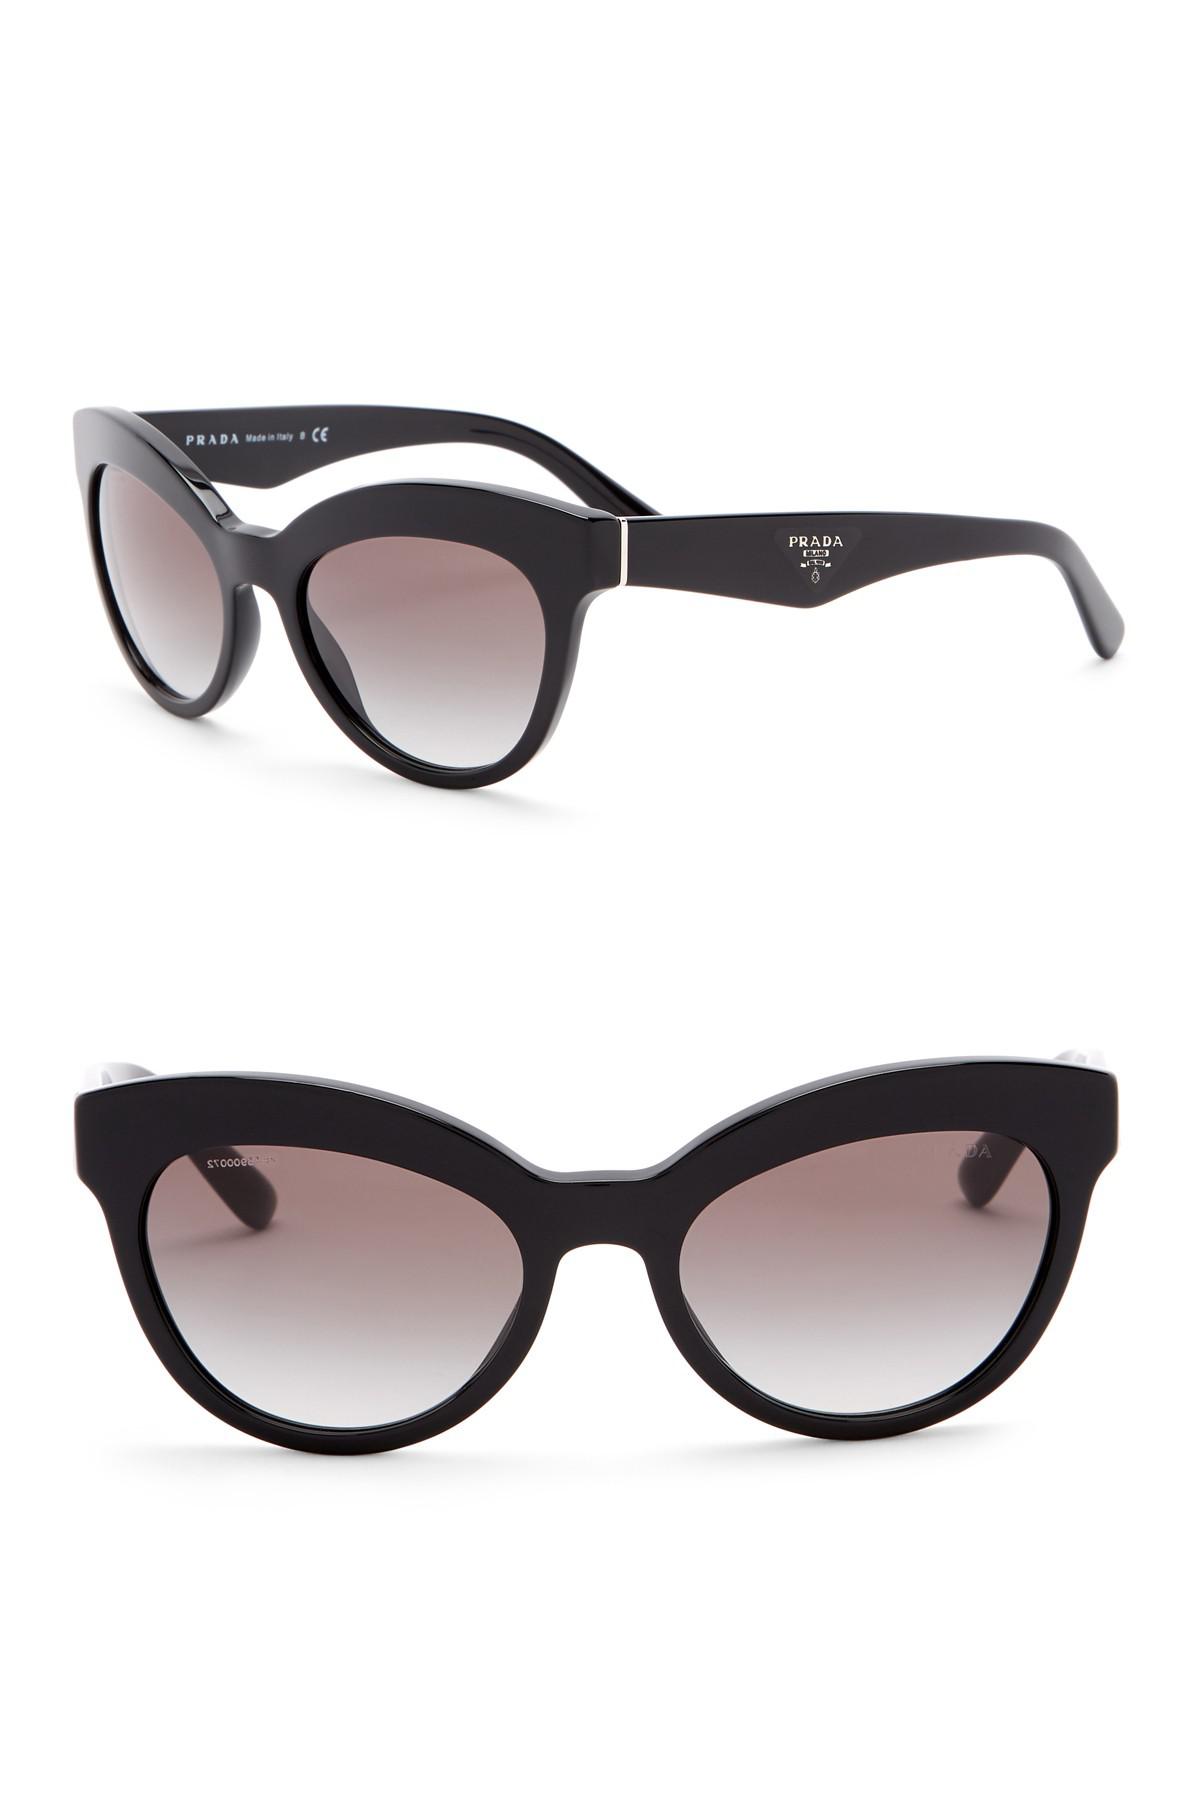 Prada 53mm Cat Eye Sunglasses in Black - Lyst